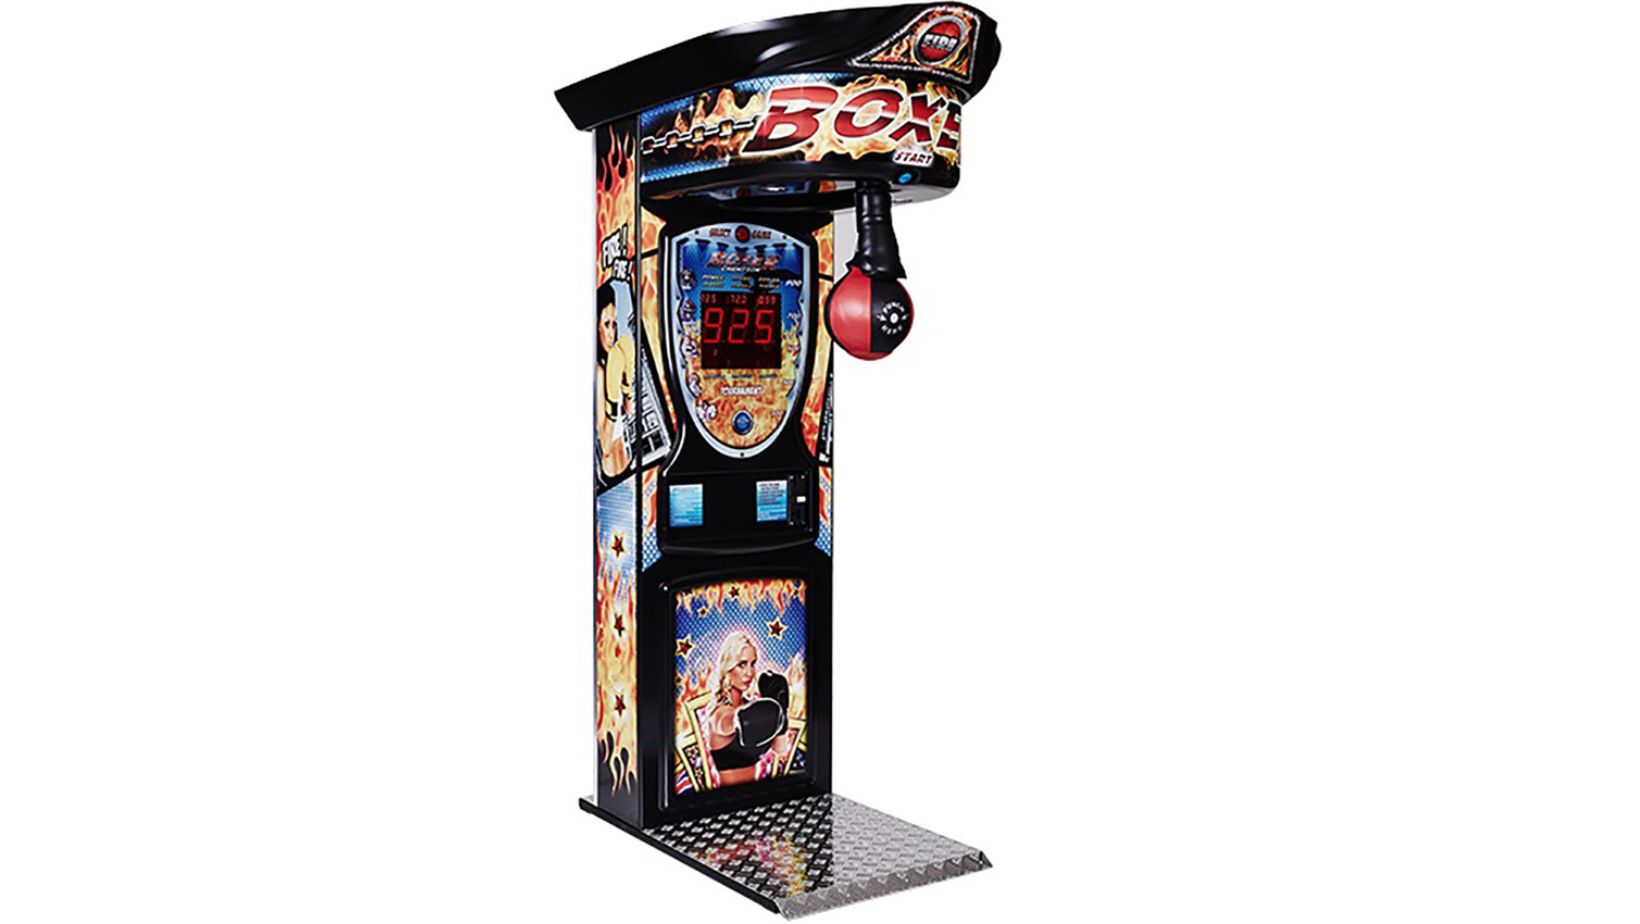 Are Arcade Boxer Machines Accurate?